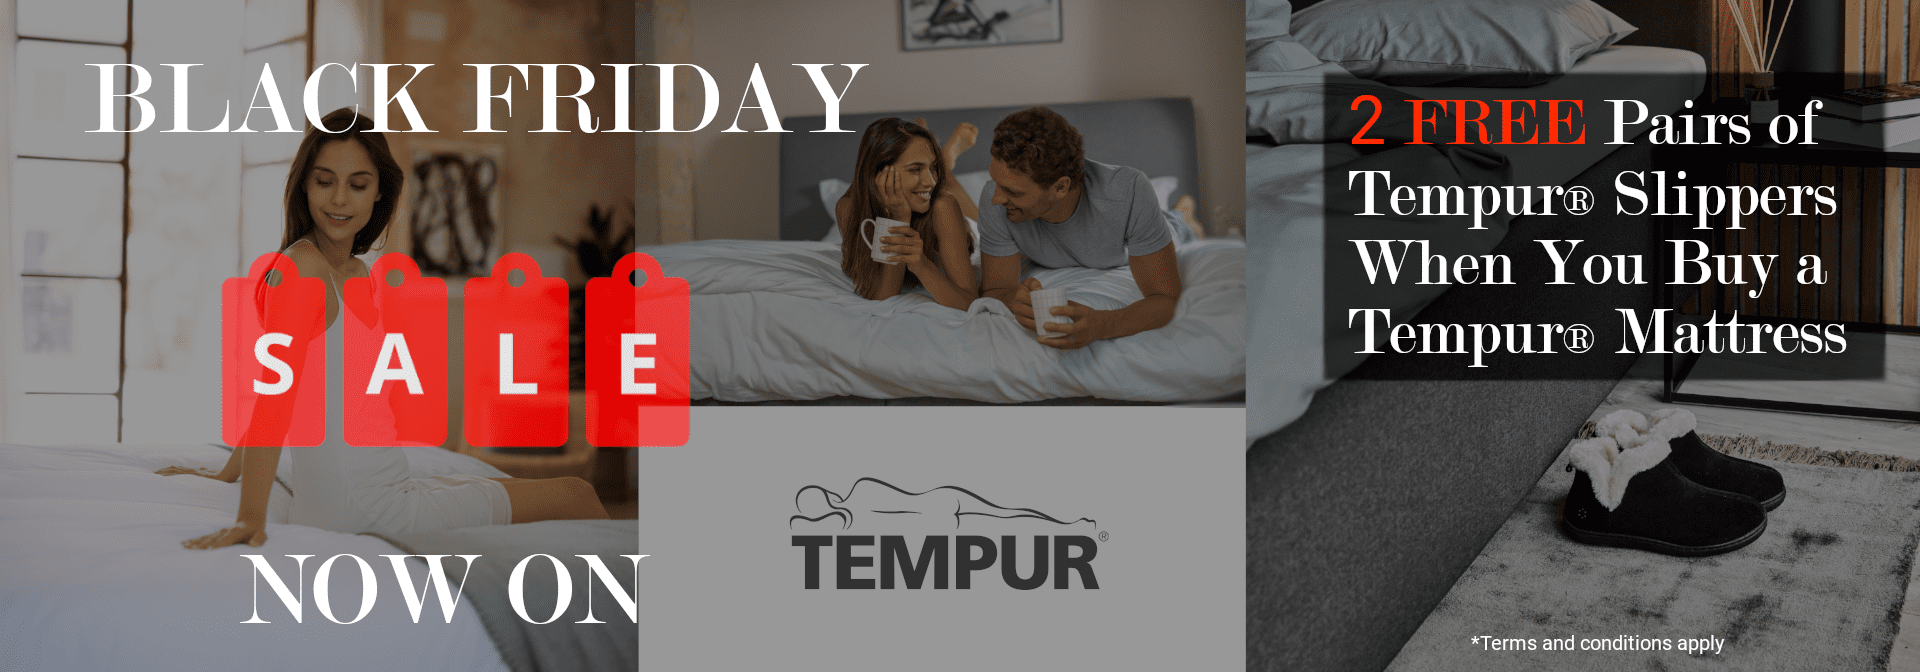 Tempur Black Friday Offers